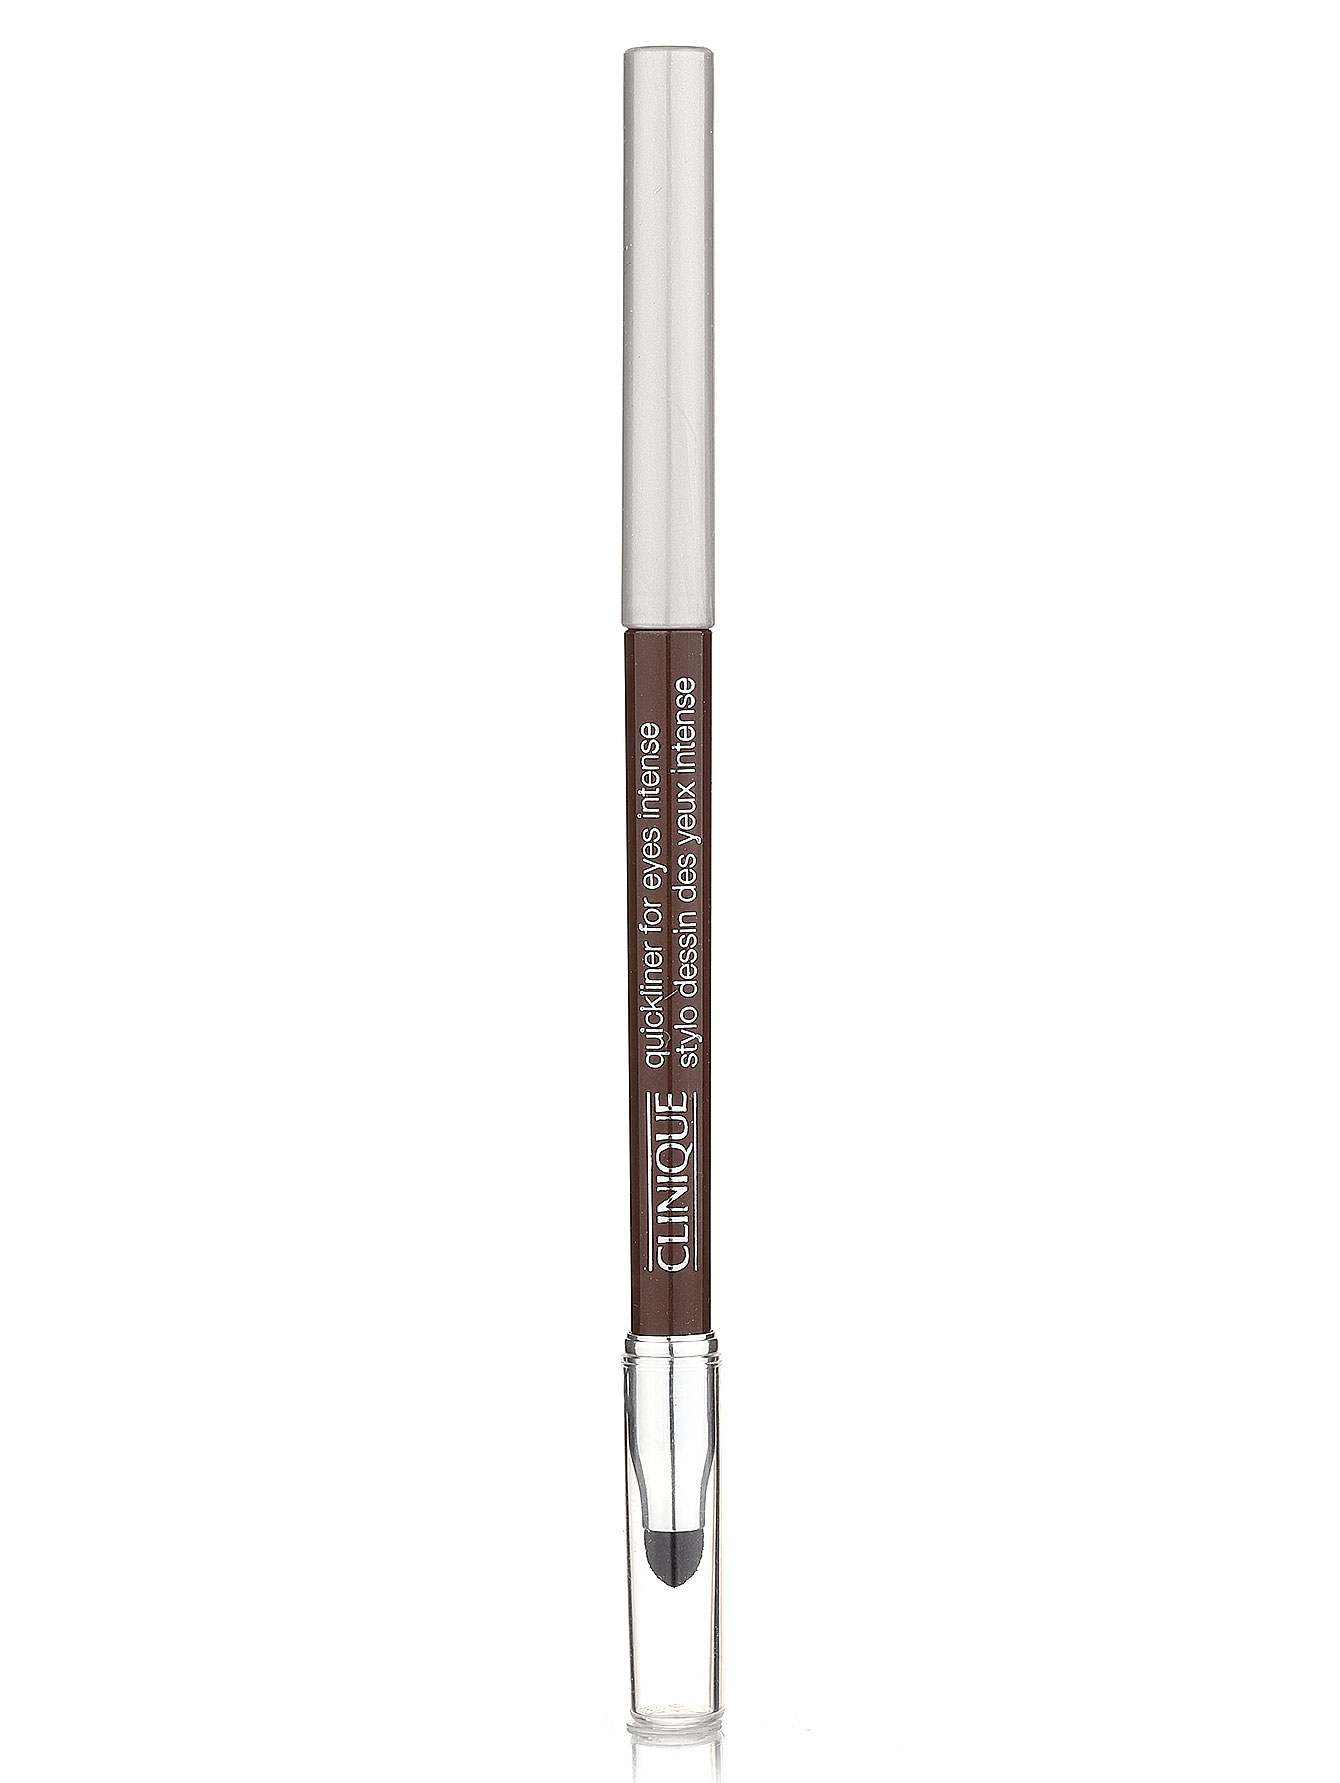  Автоматический карандаш для глаз - Intense Chocolate, Quickliner - Модель Верх-Низ